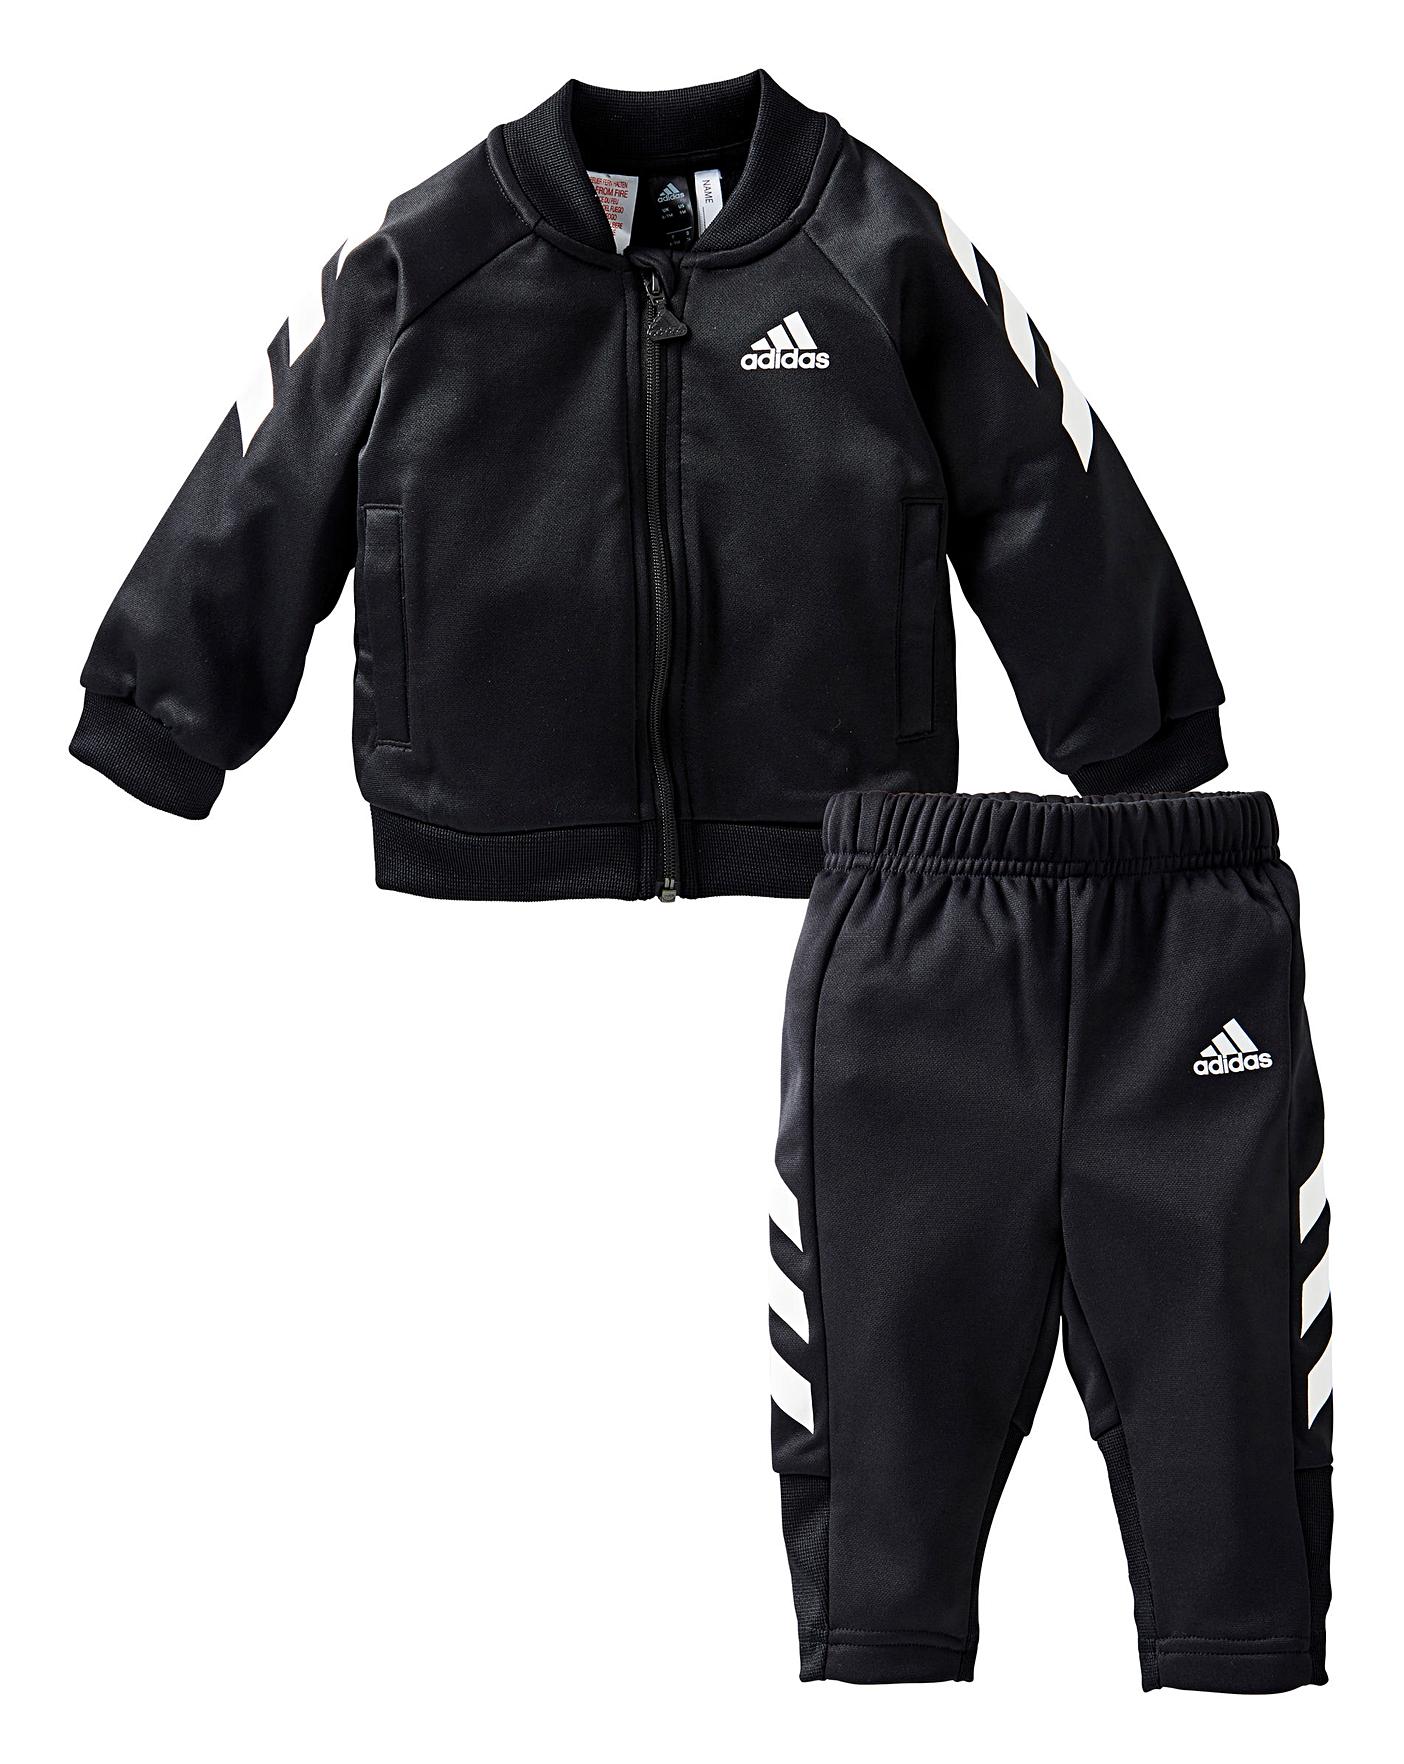 adidas track suit infant